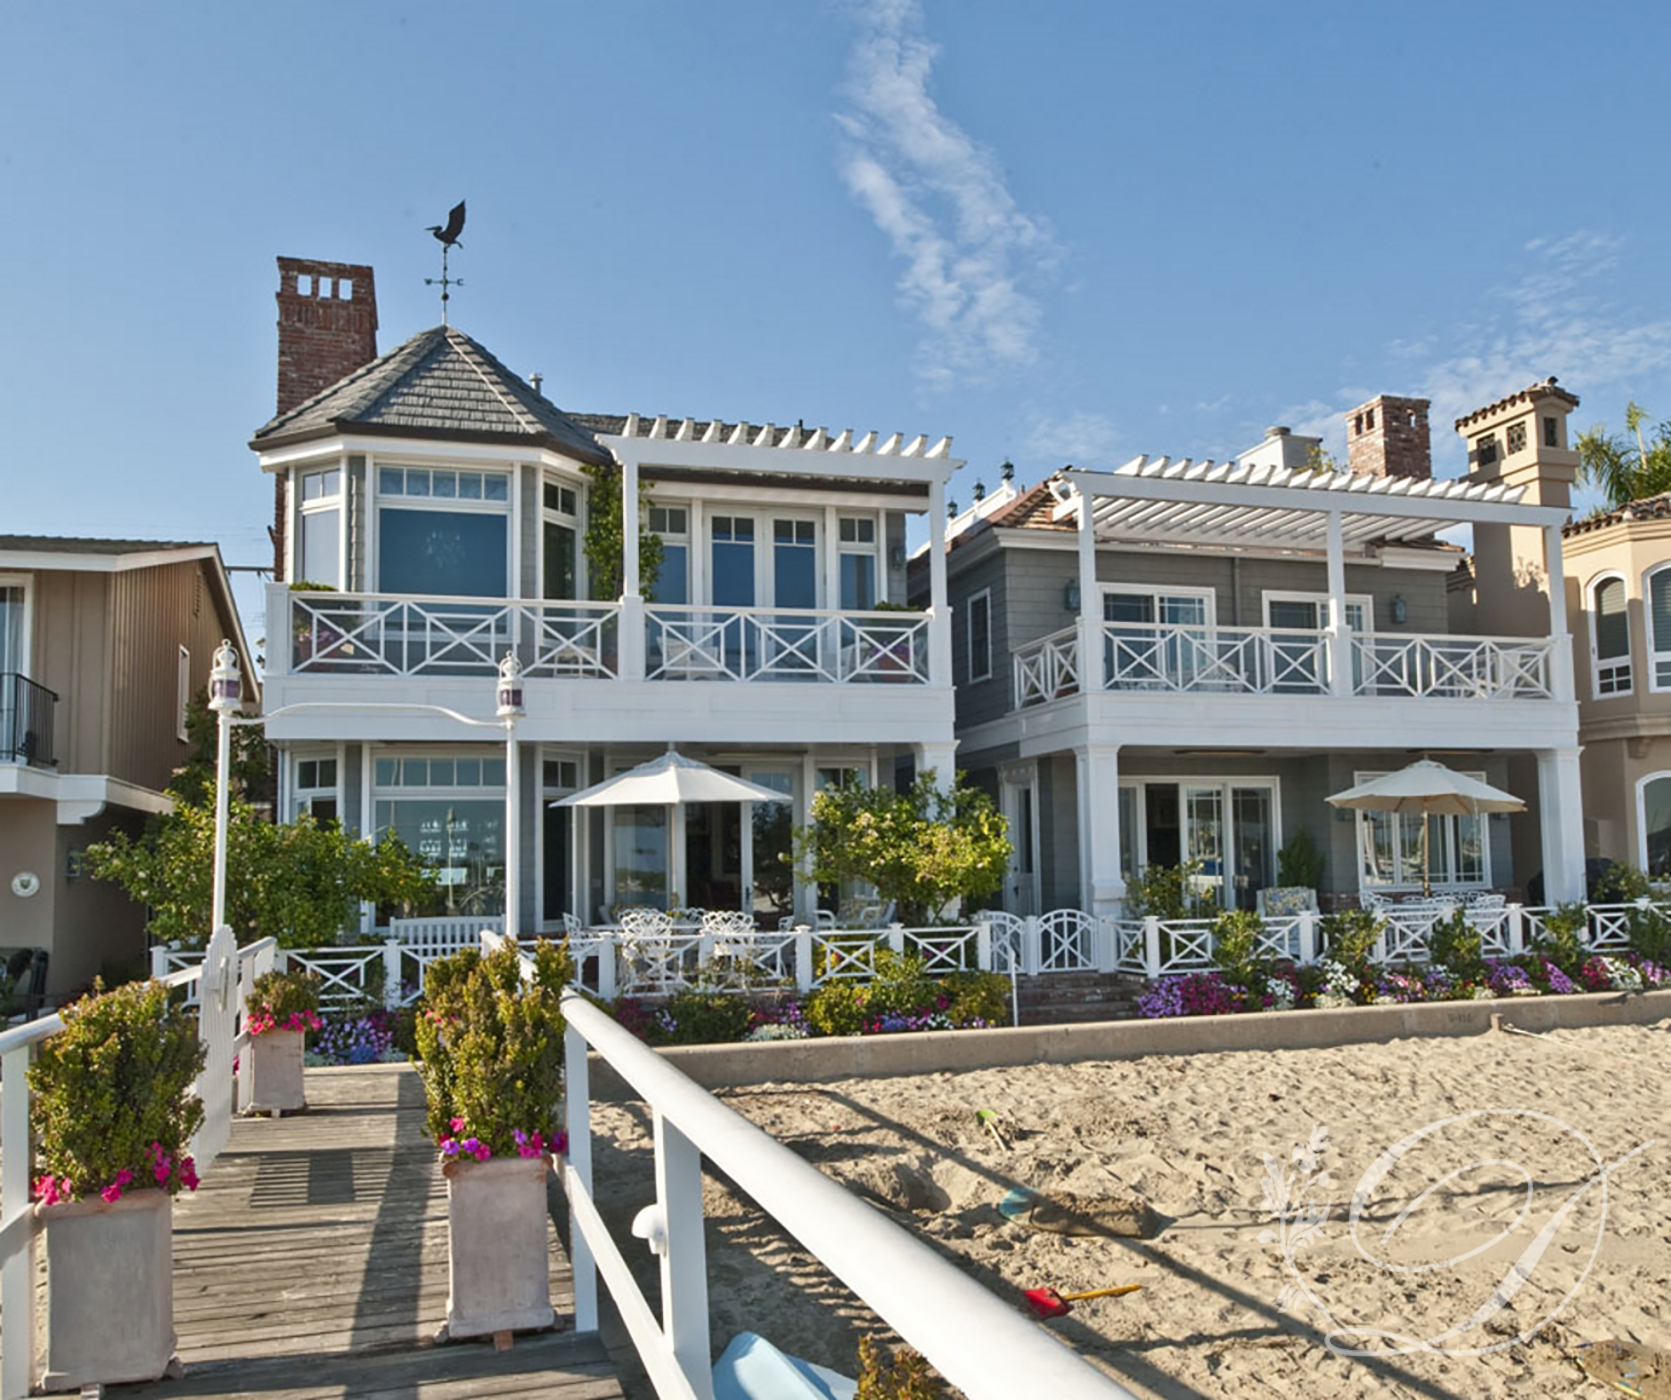 018_-Newport-Beach-homes